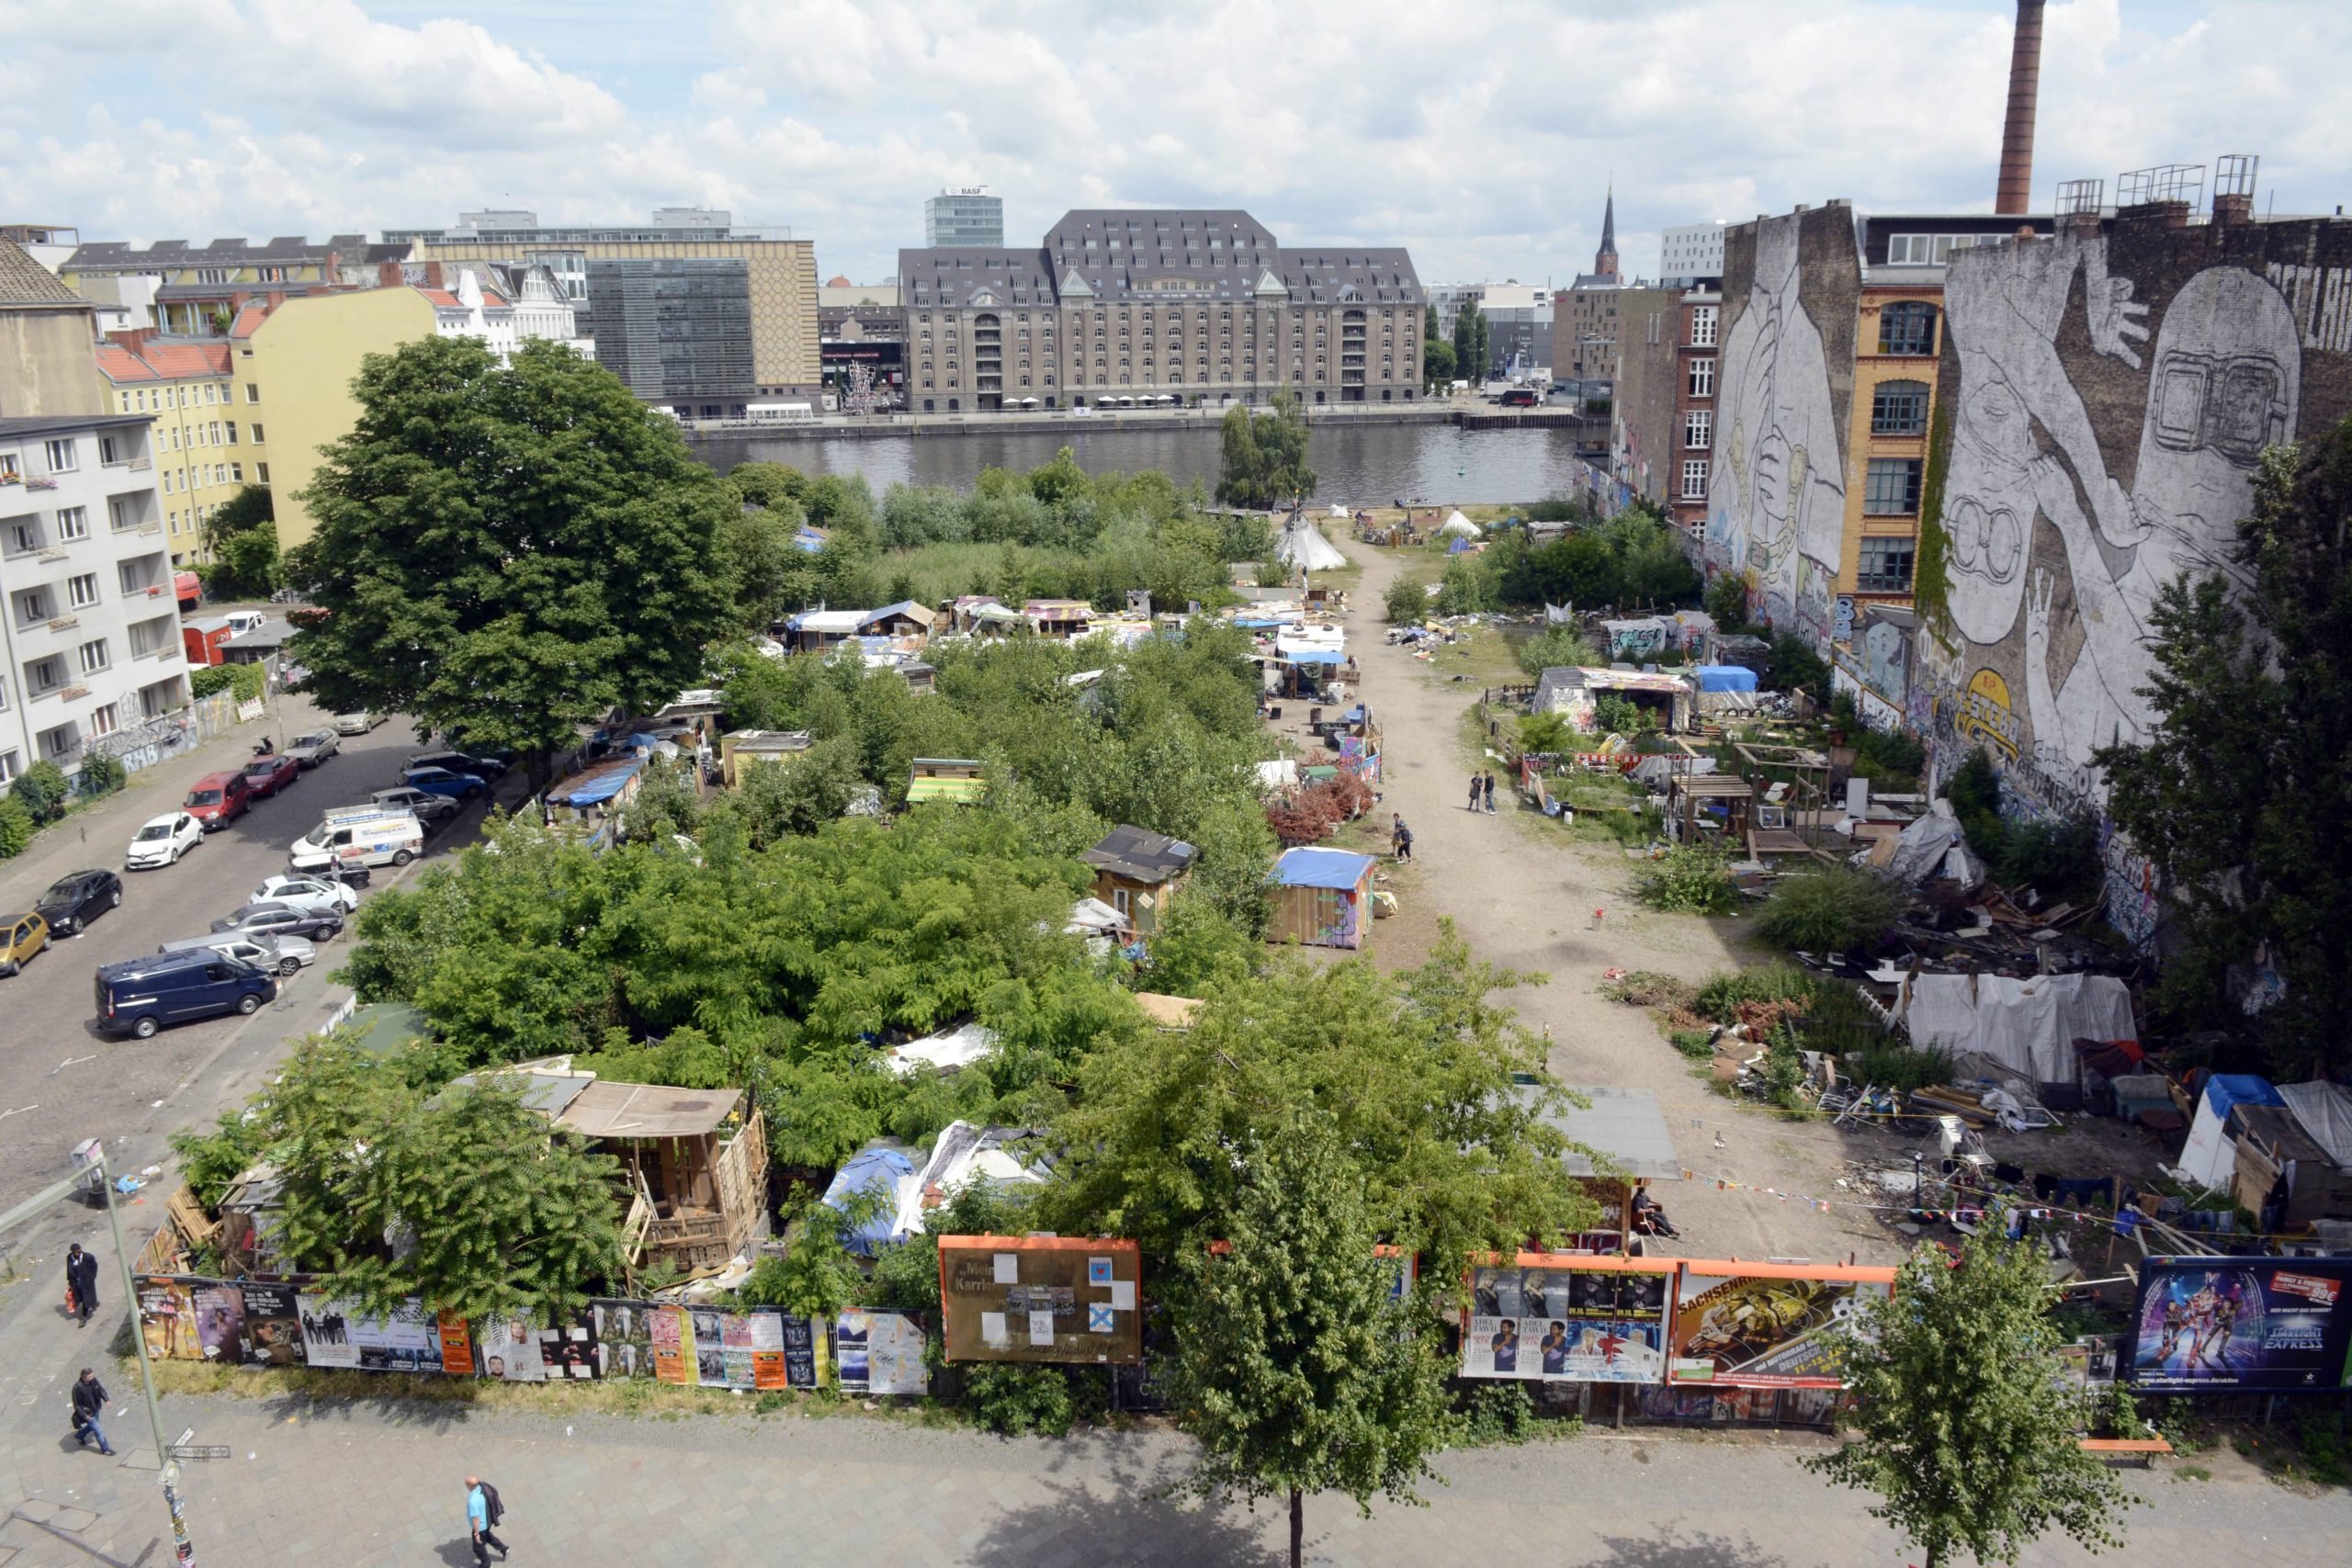 Brachen in Berlin: Provisorisches Camp an der Cuvry-Brache in Kreuzberg, 2014. Foto: Imago/Bernd Friedel